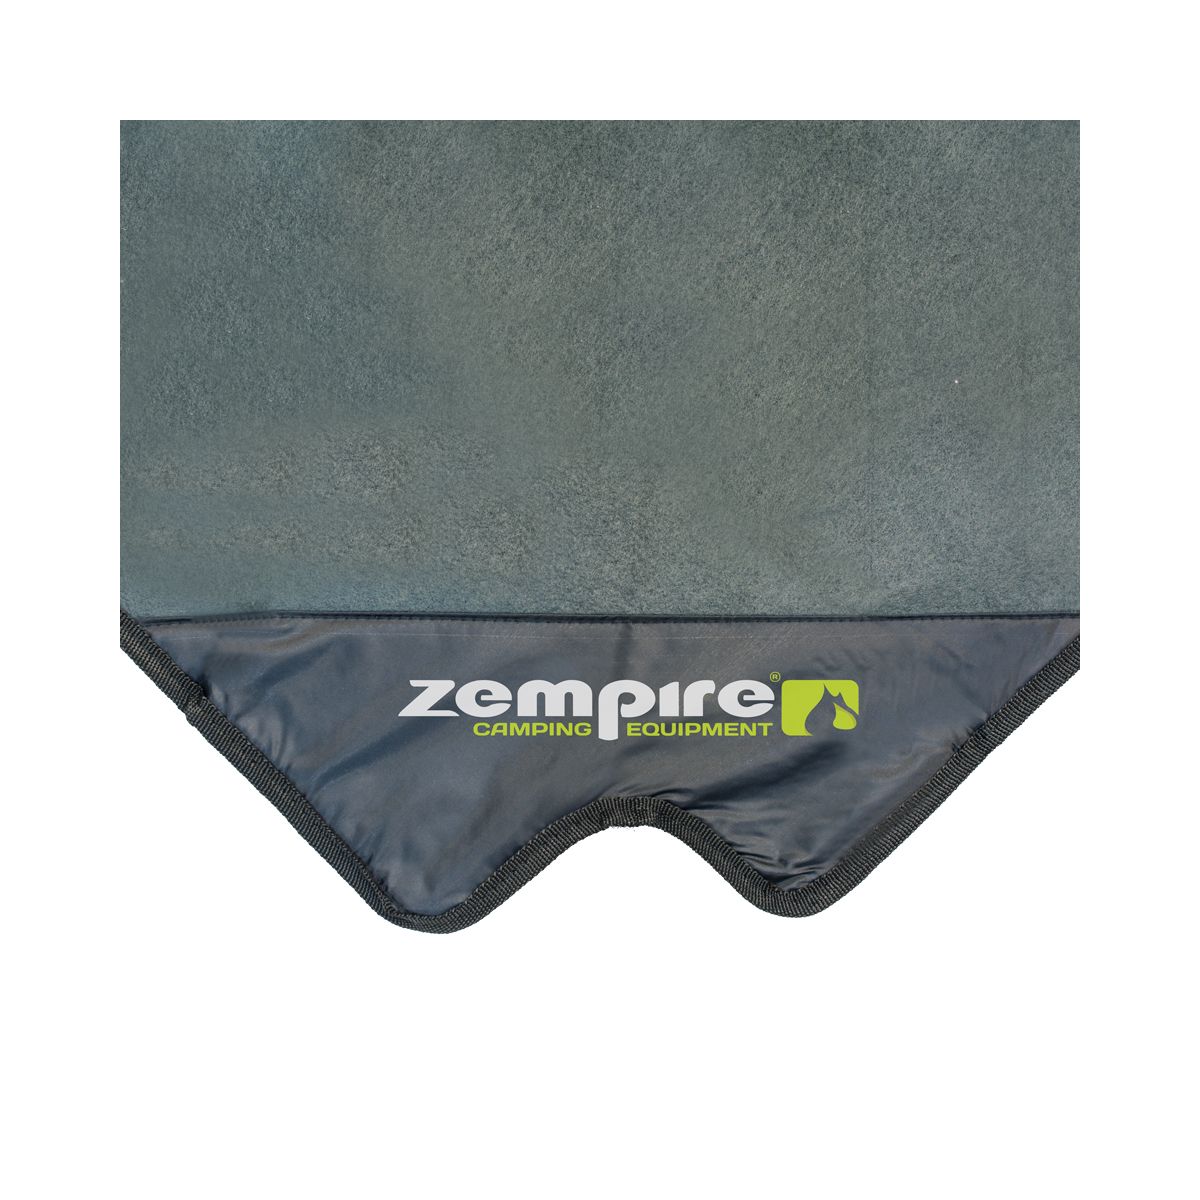 Zempire Aero Tl Carpet V2 - Charcoal